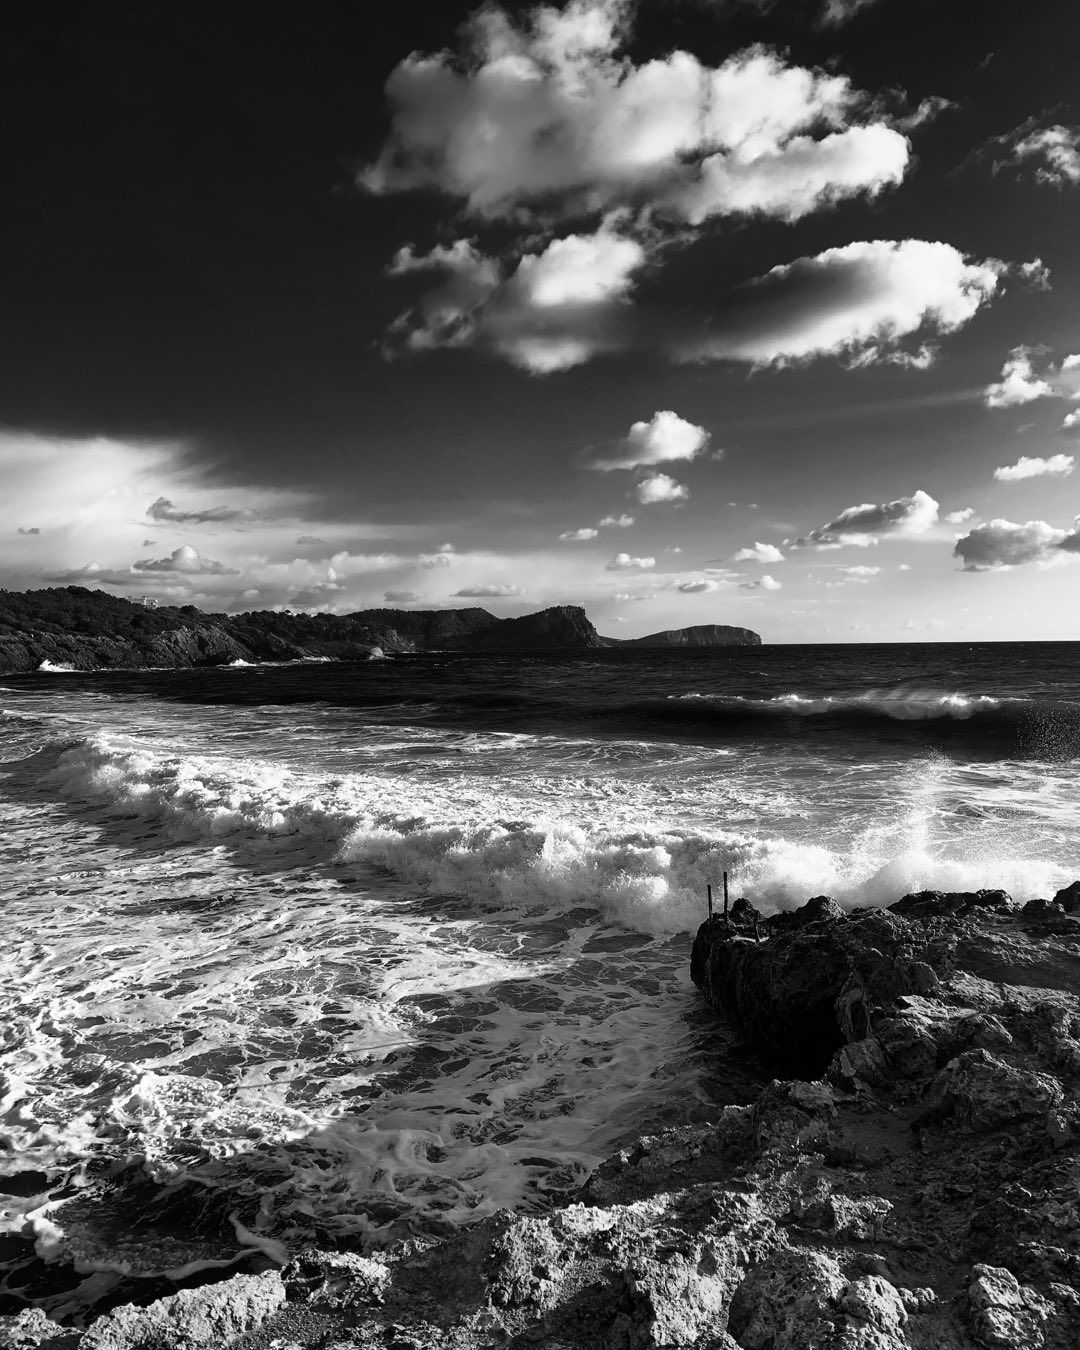 Good swell at Cala nova Ibiza today